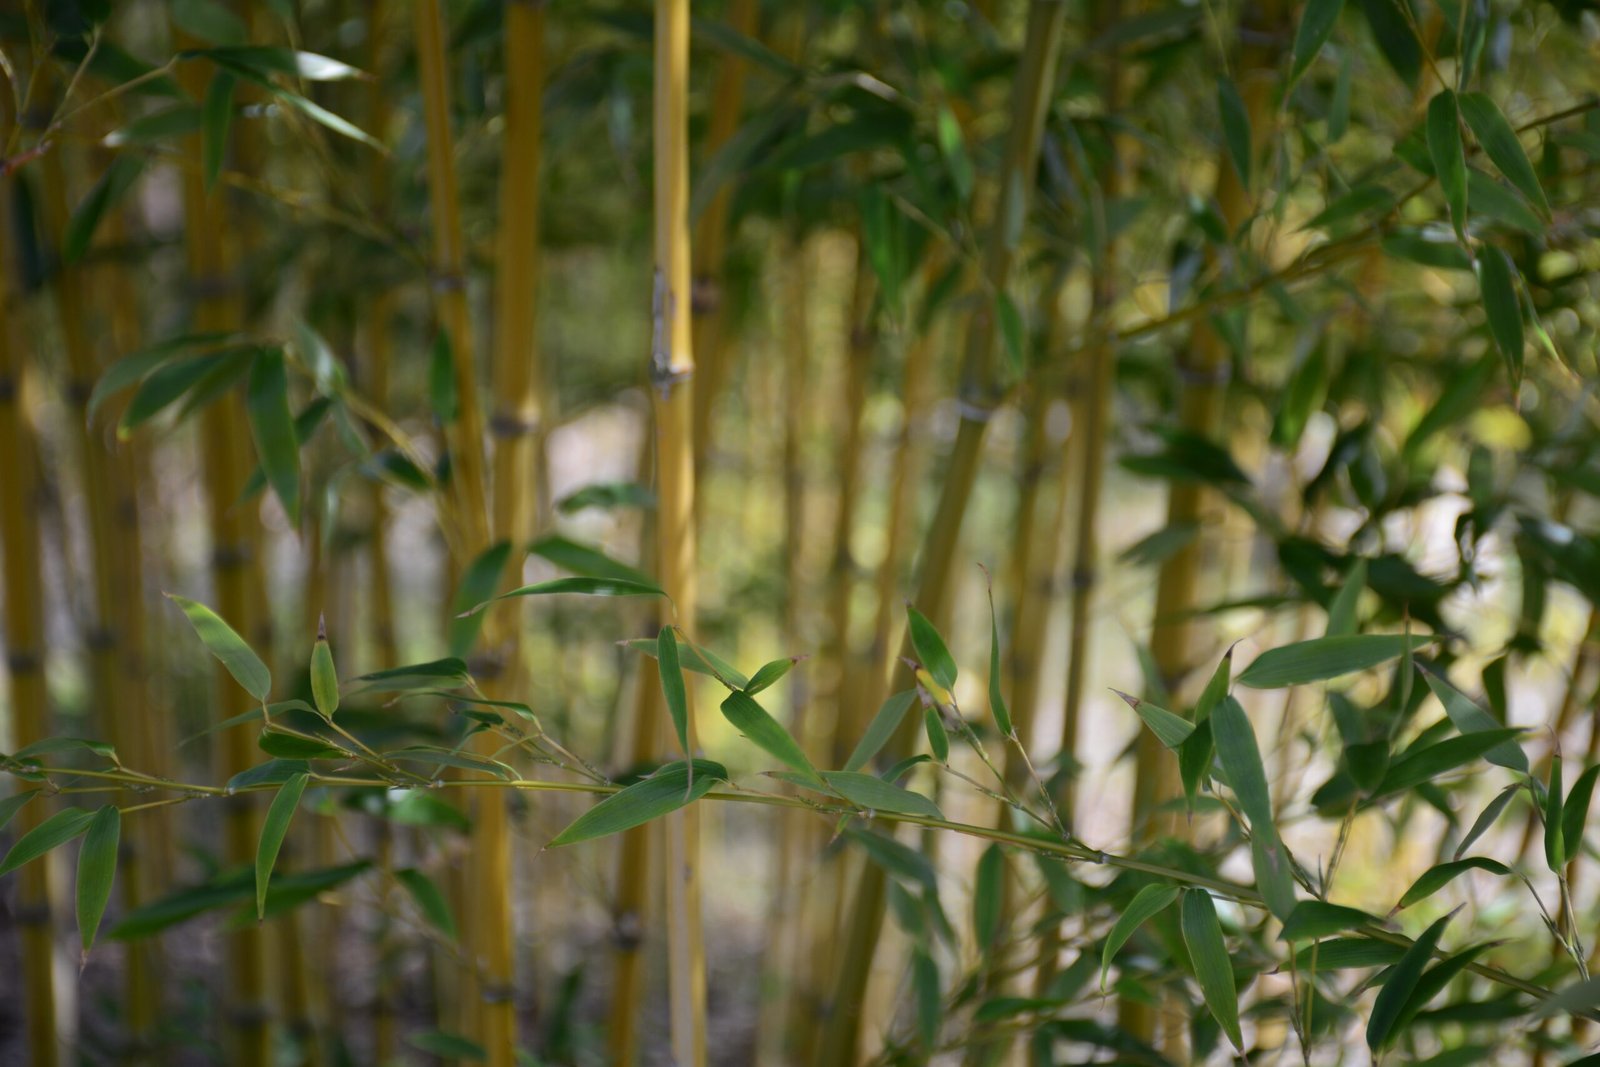 Bamboo, Bamboo uses and benefits, Bamboo sustainability